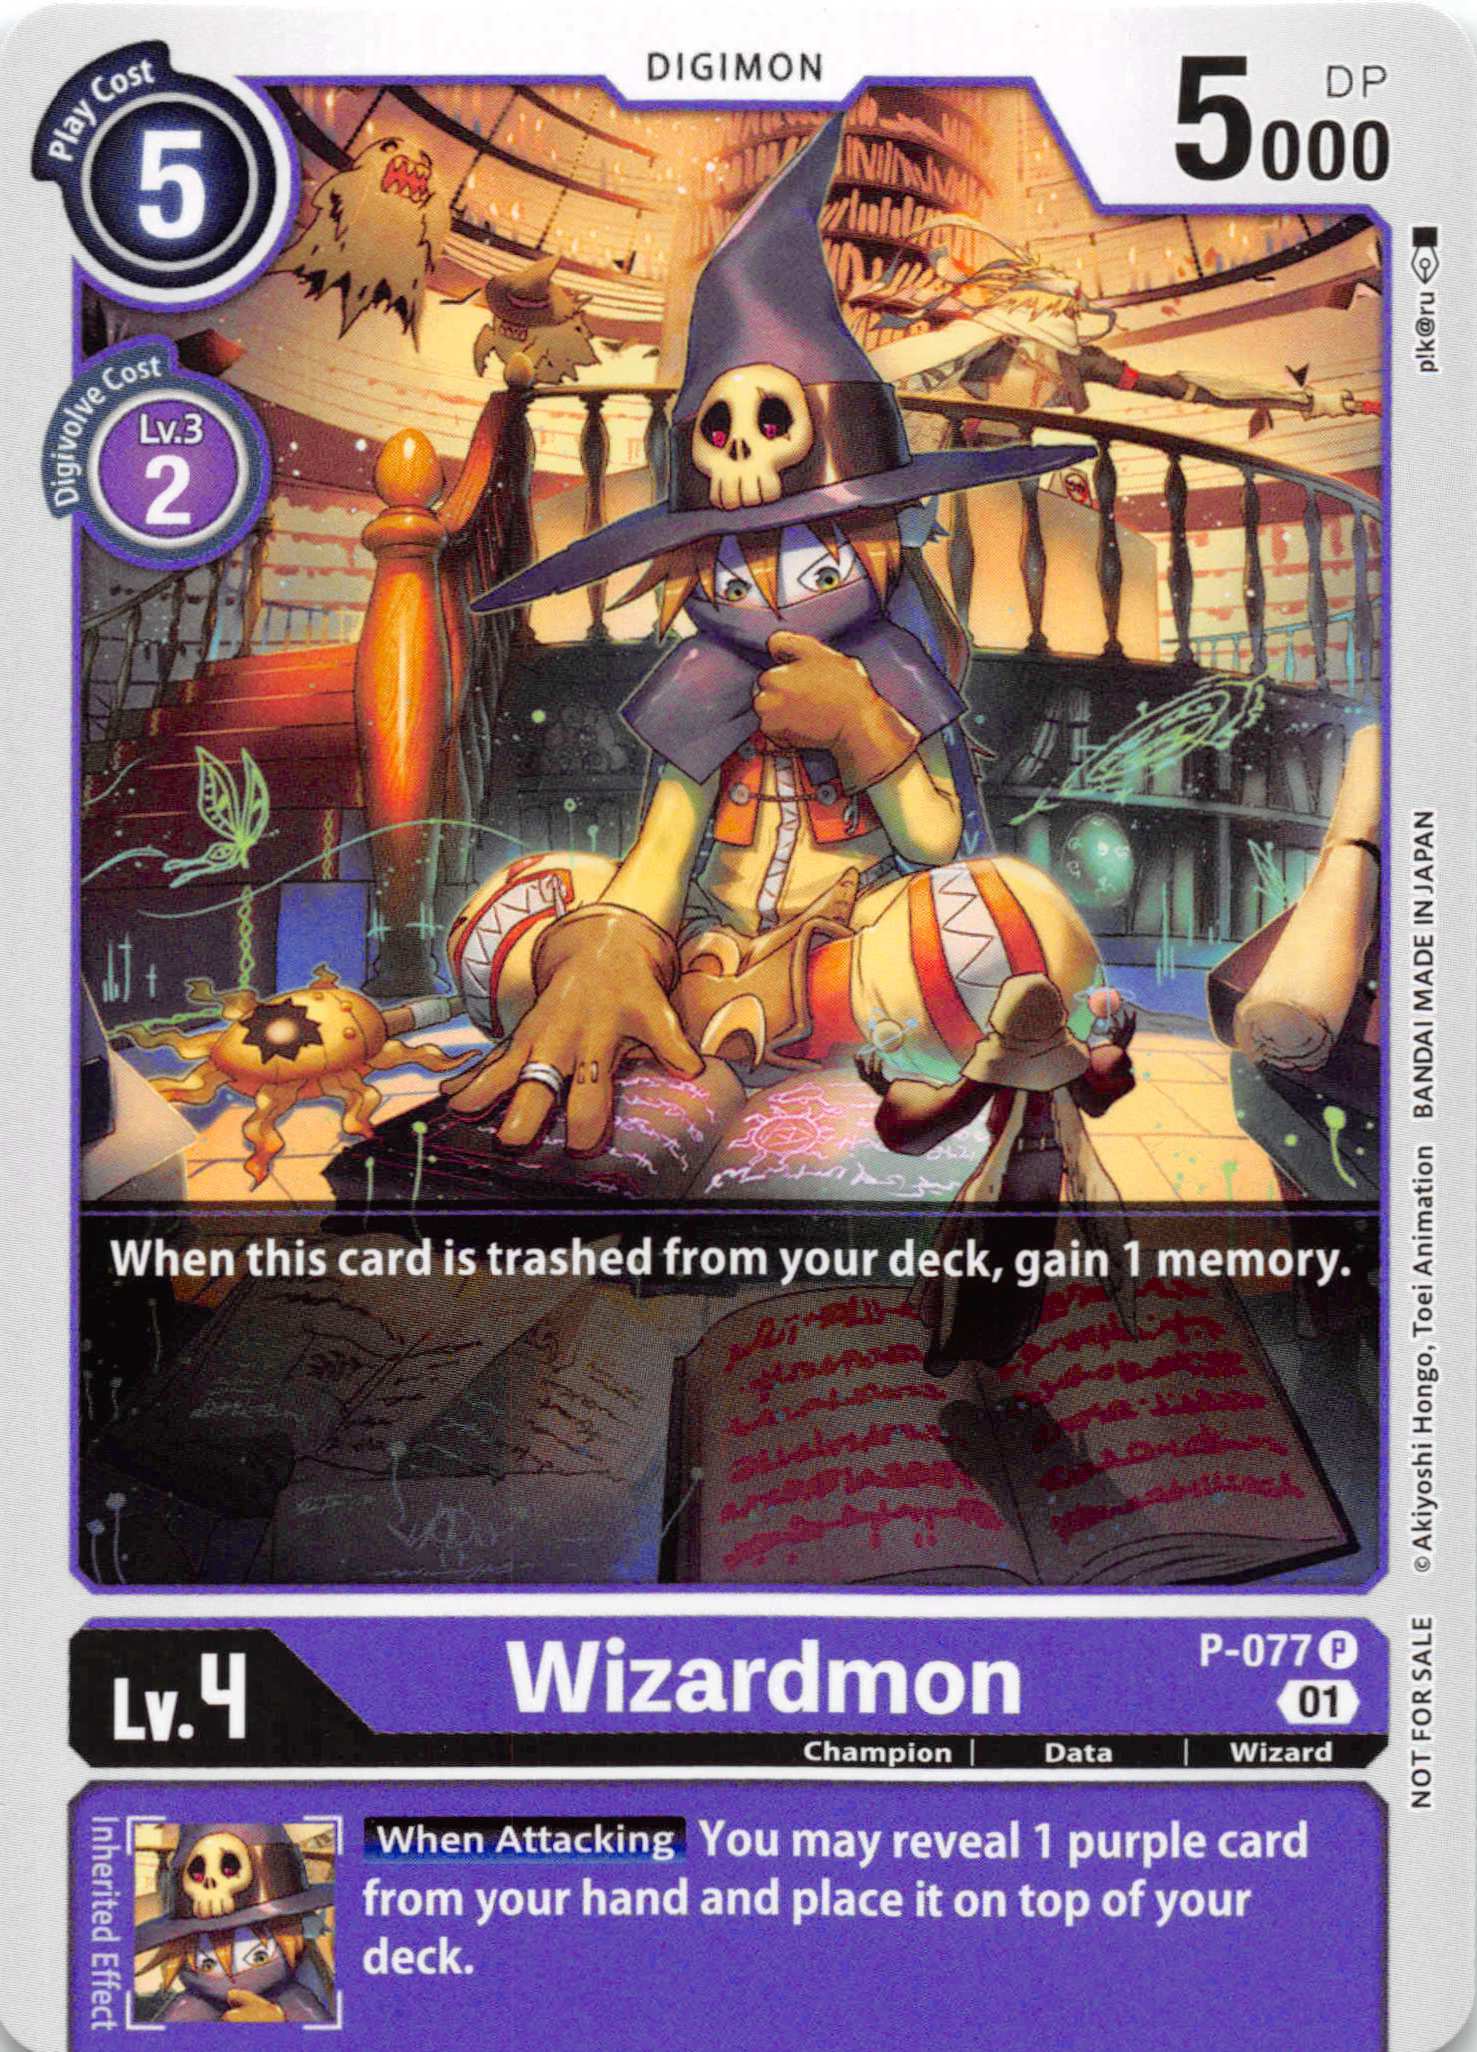 Wizardmon - P-077 [P-077] [Digimon Promotion Cards] Normal